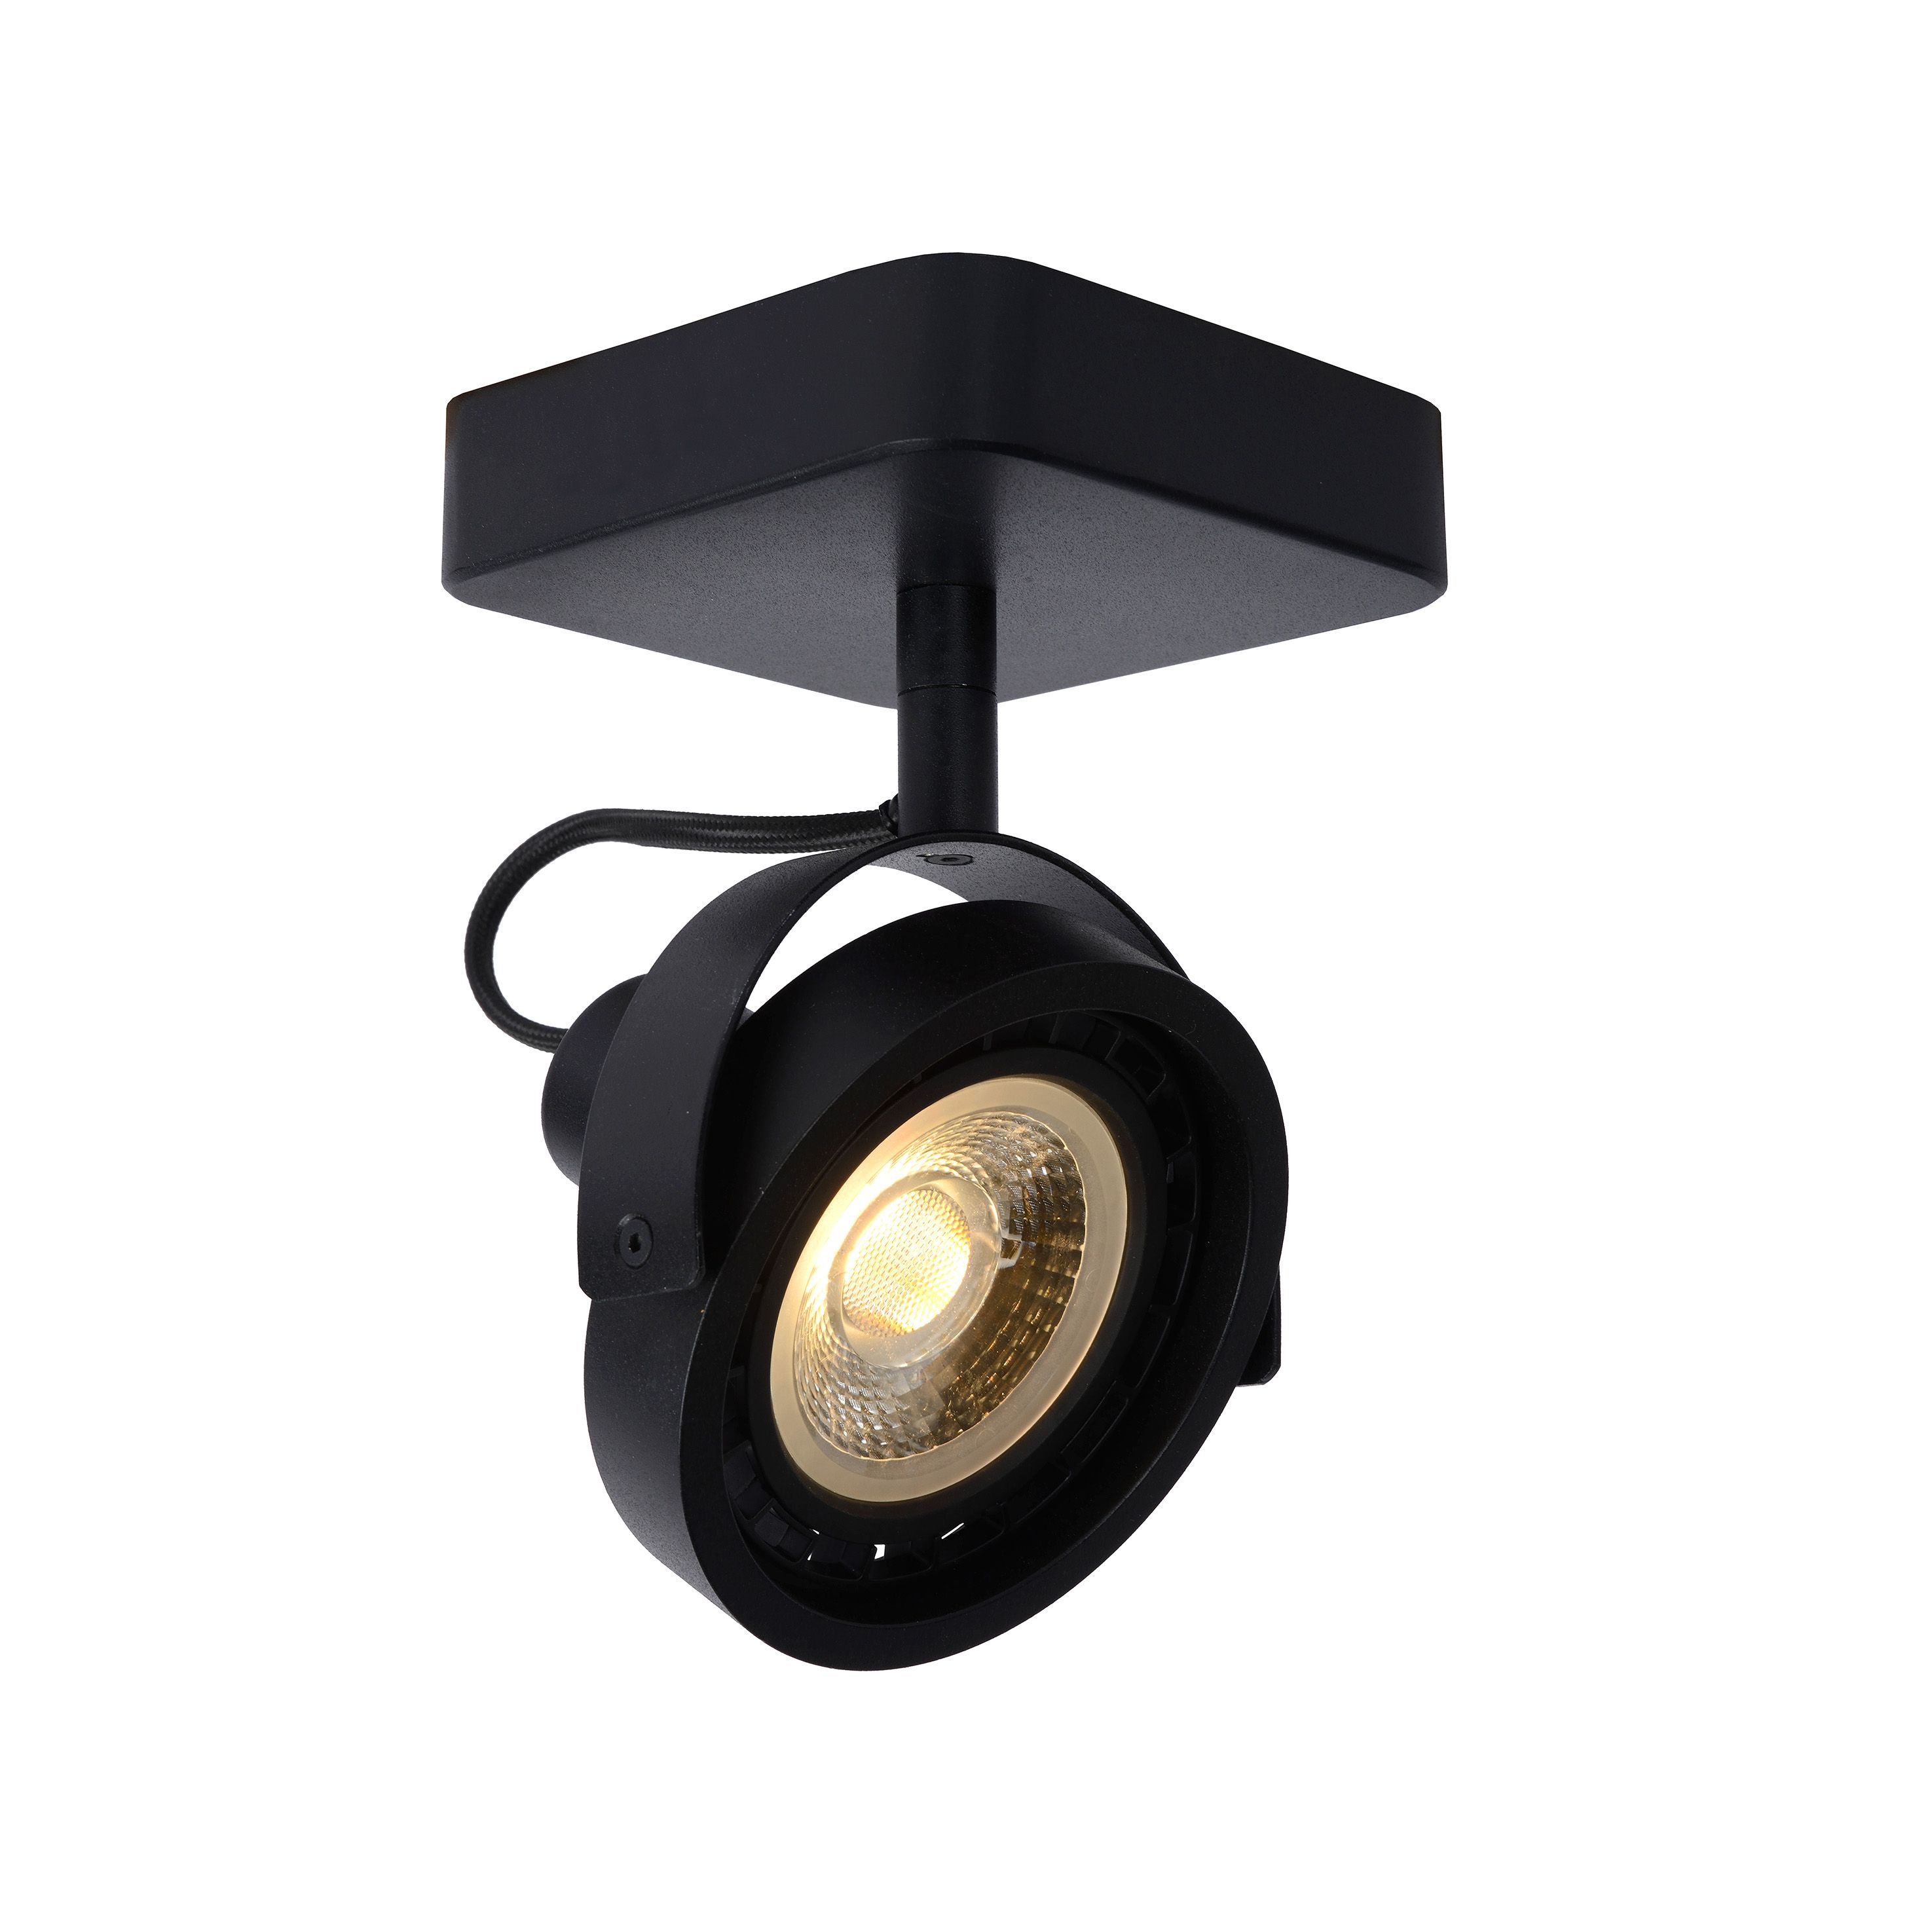 Ventileren zeven achterstalligheid Lucide Tala LED - opbouwspot 1L - 12 x 12 x 20 cm - 12W dimbare LED incl. -  zwart | Lichtkoning